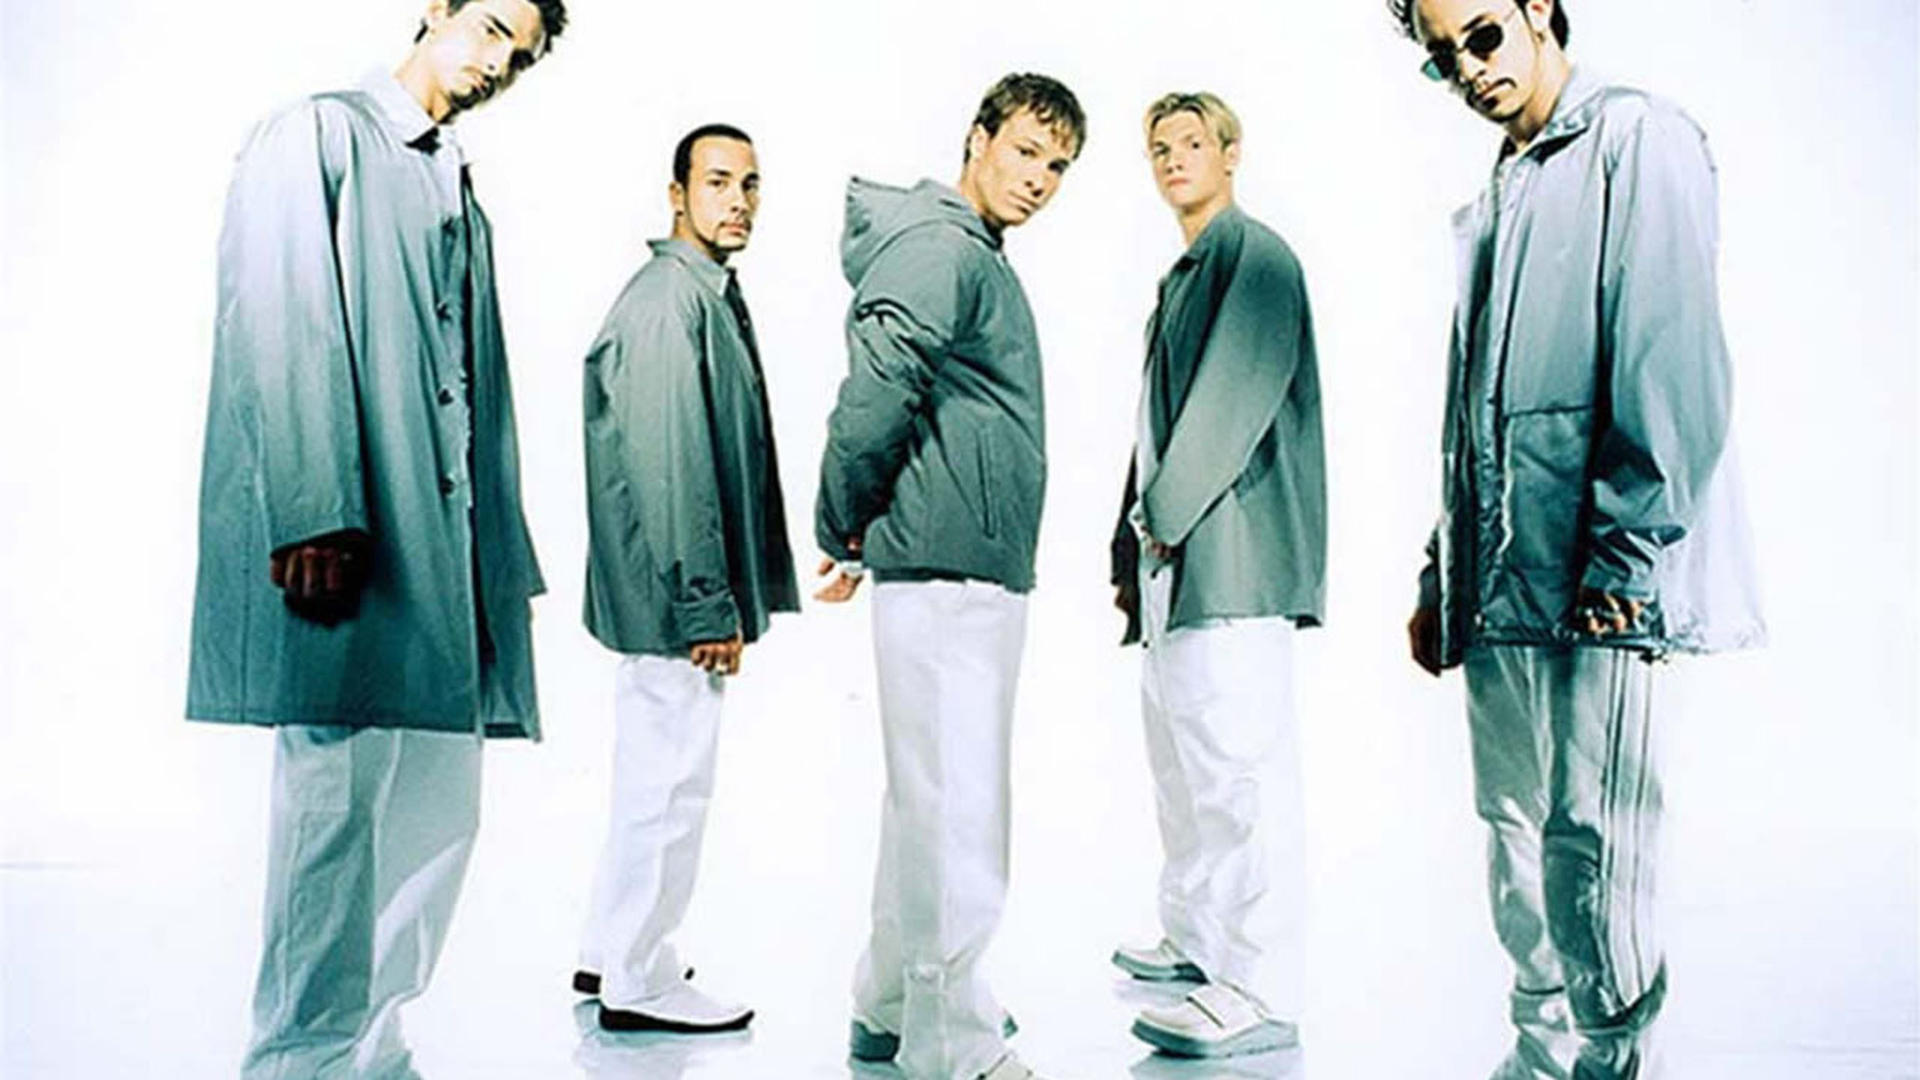 How Well Do You Know the Backstreet Boys?